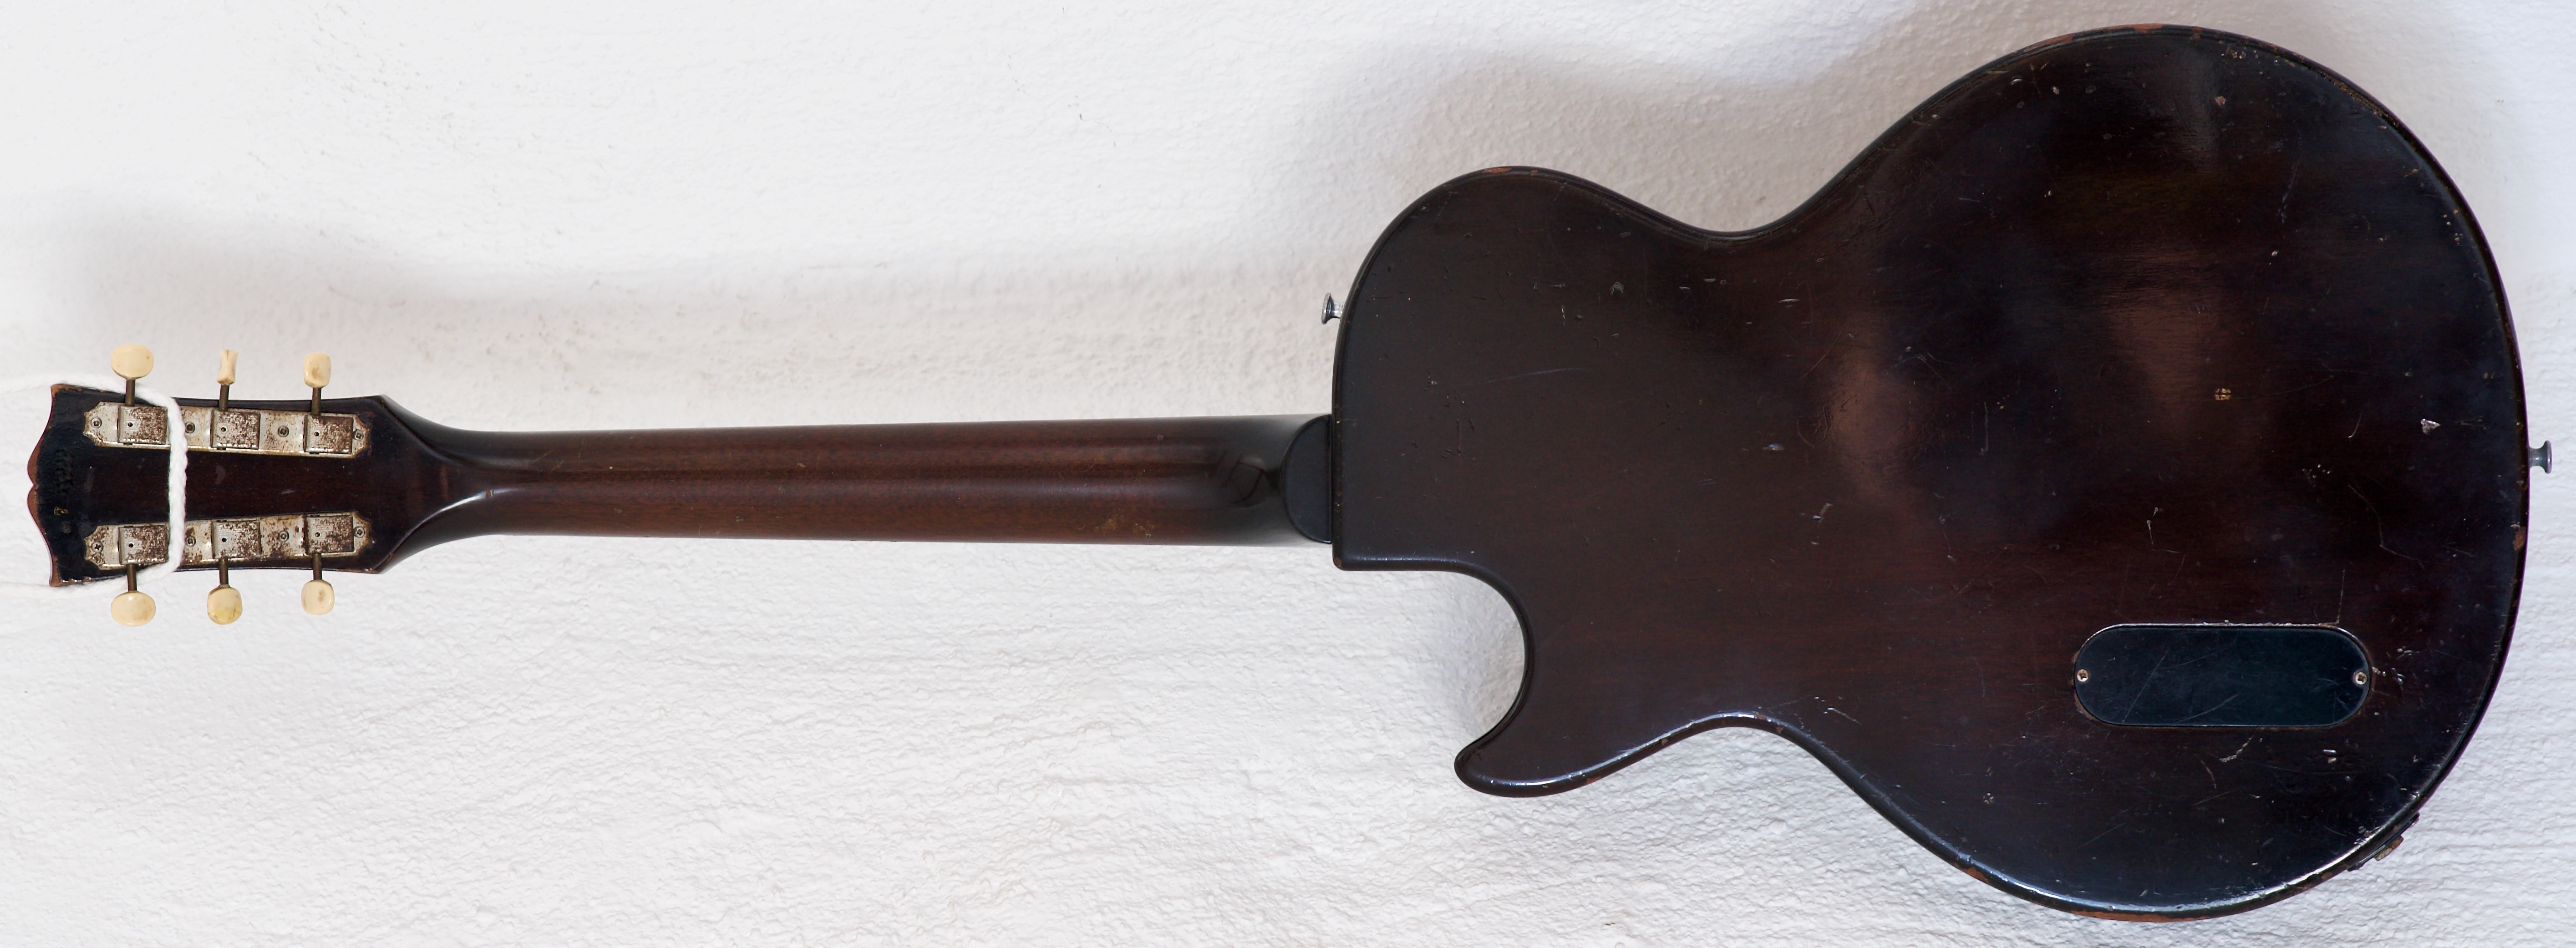 1957 Gibson Les Paul jr 3/4